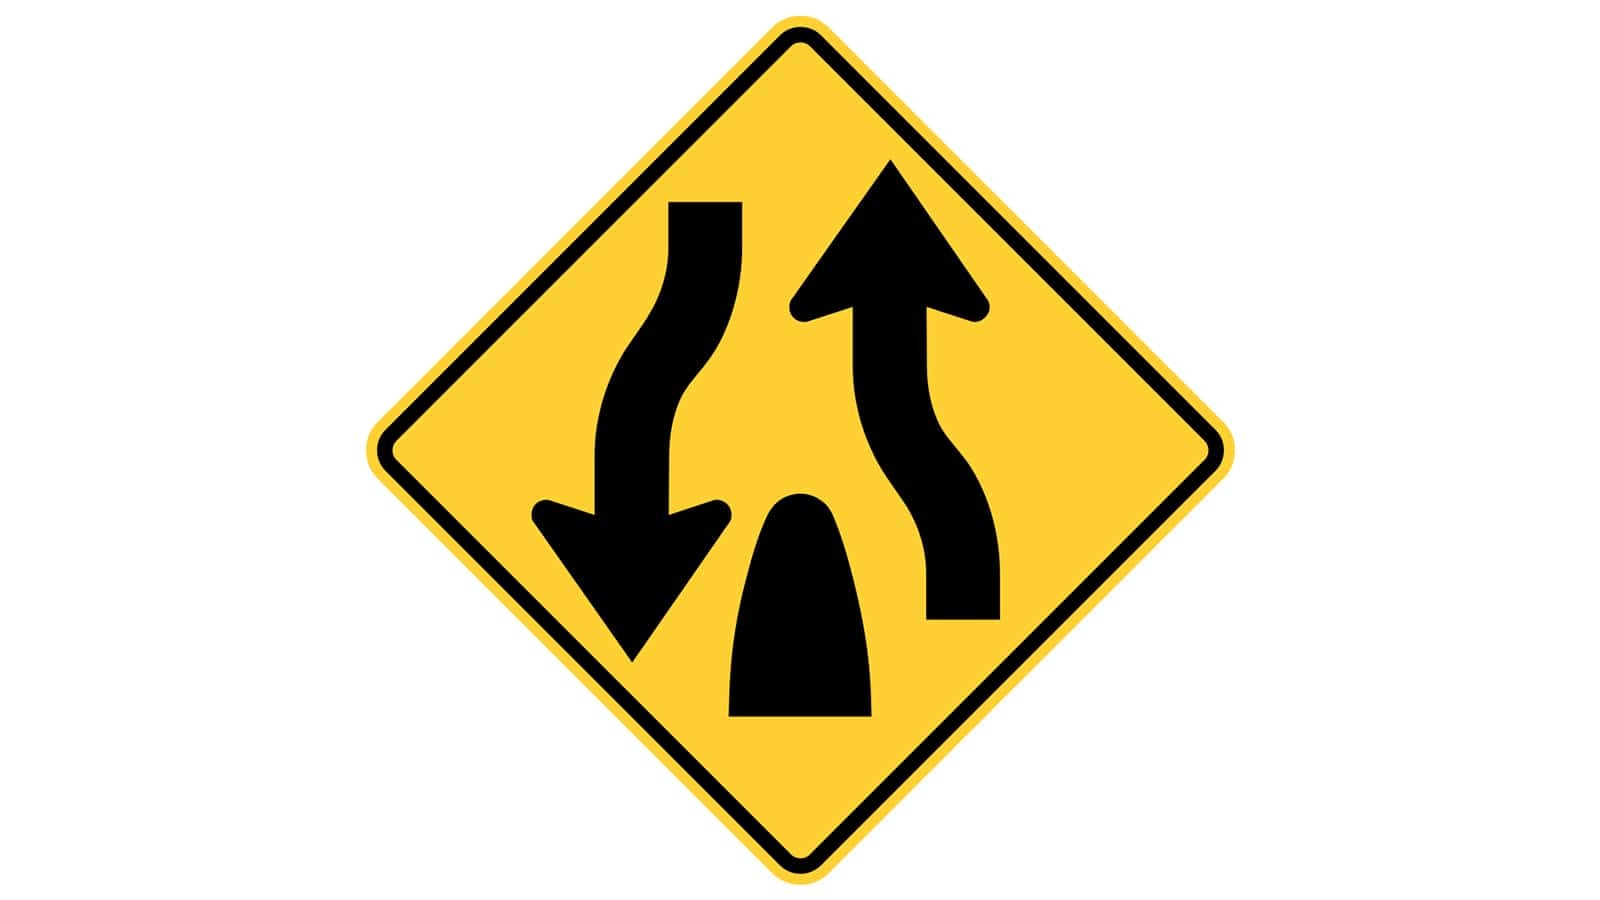 Warning sign Divided Highway Ends